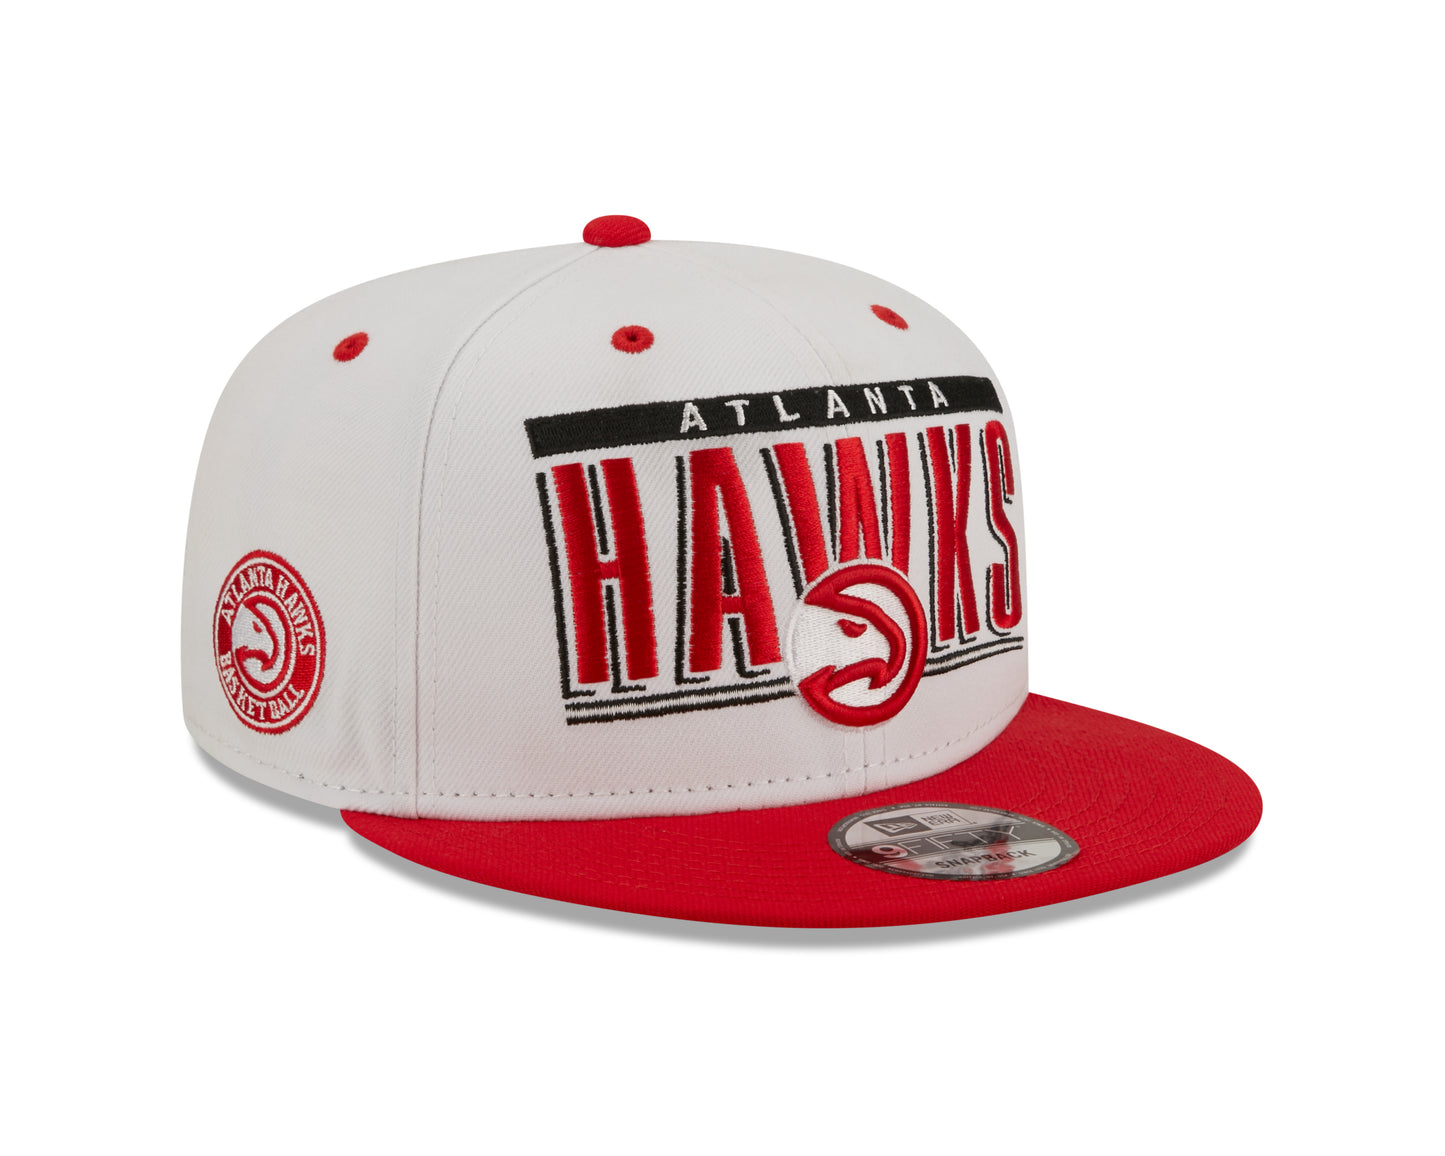 Atlanta Hawks New Era Retro Title White / Red 9FIFTY Snap Back Hat